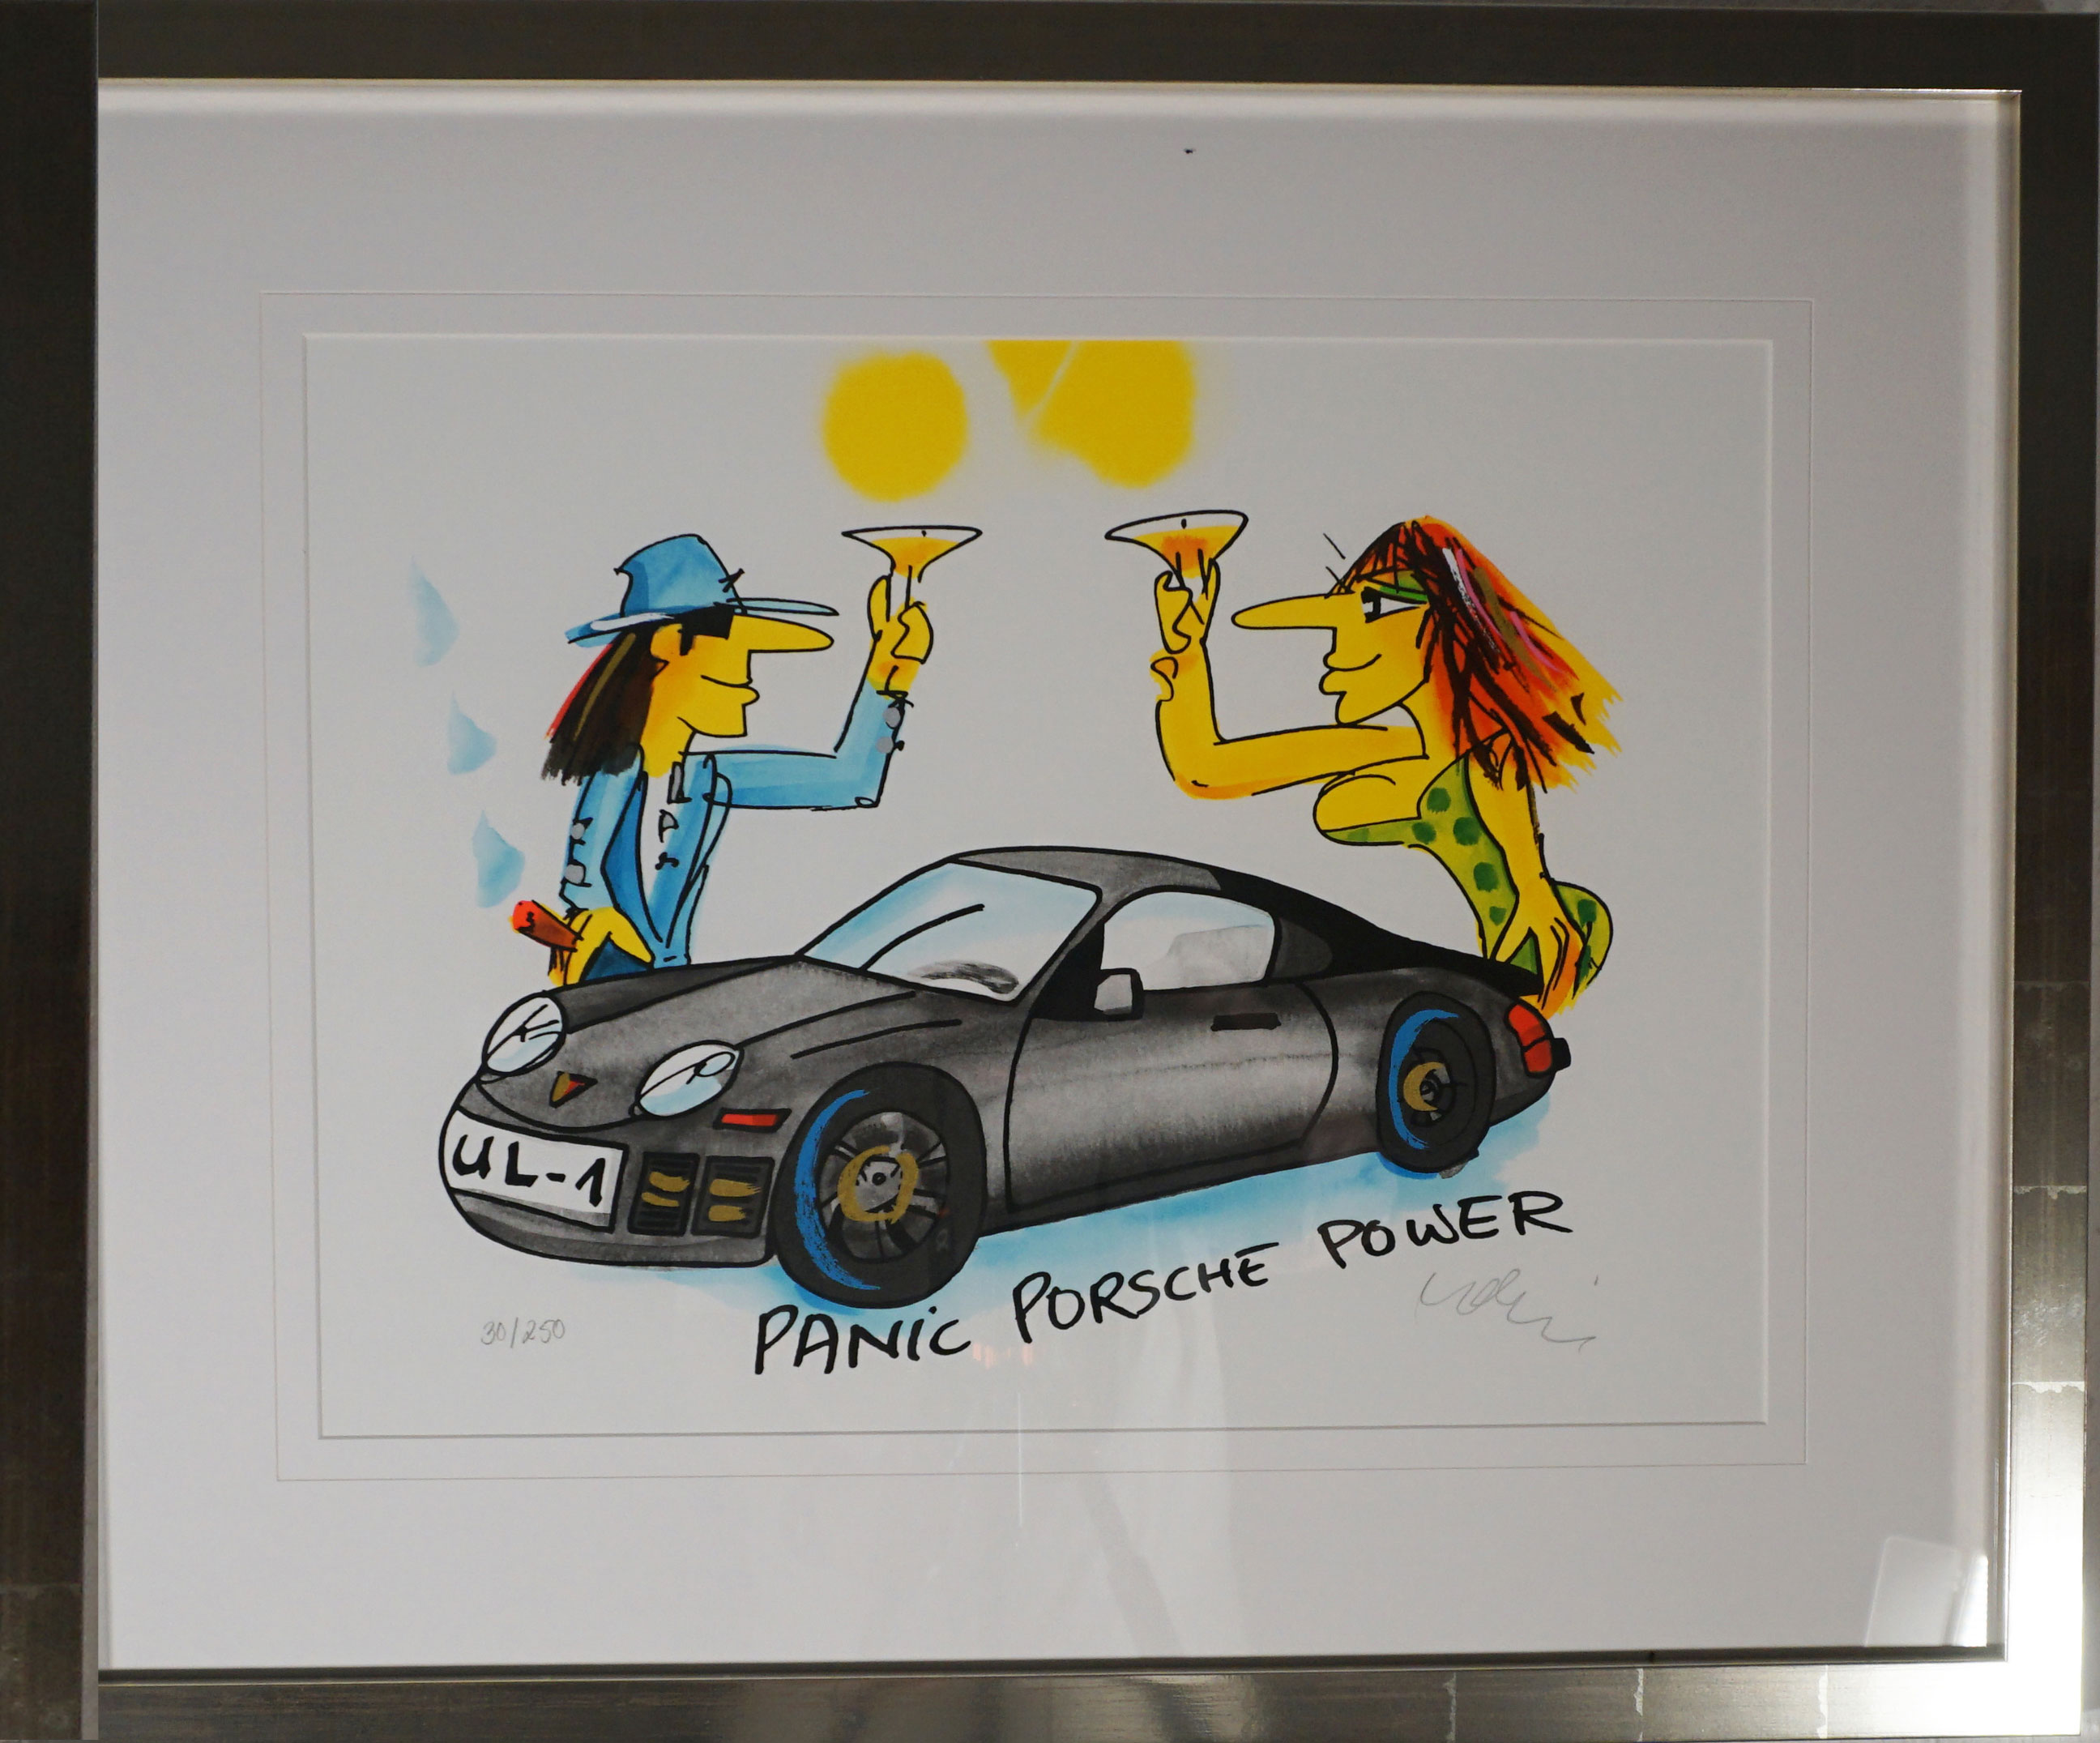 Udo Lindenberg " Panic Porsche Power"